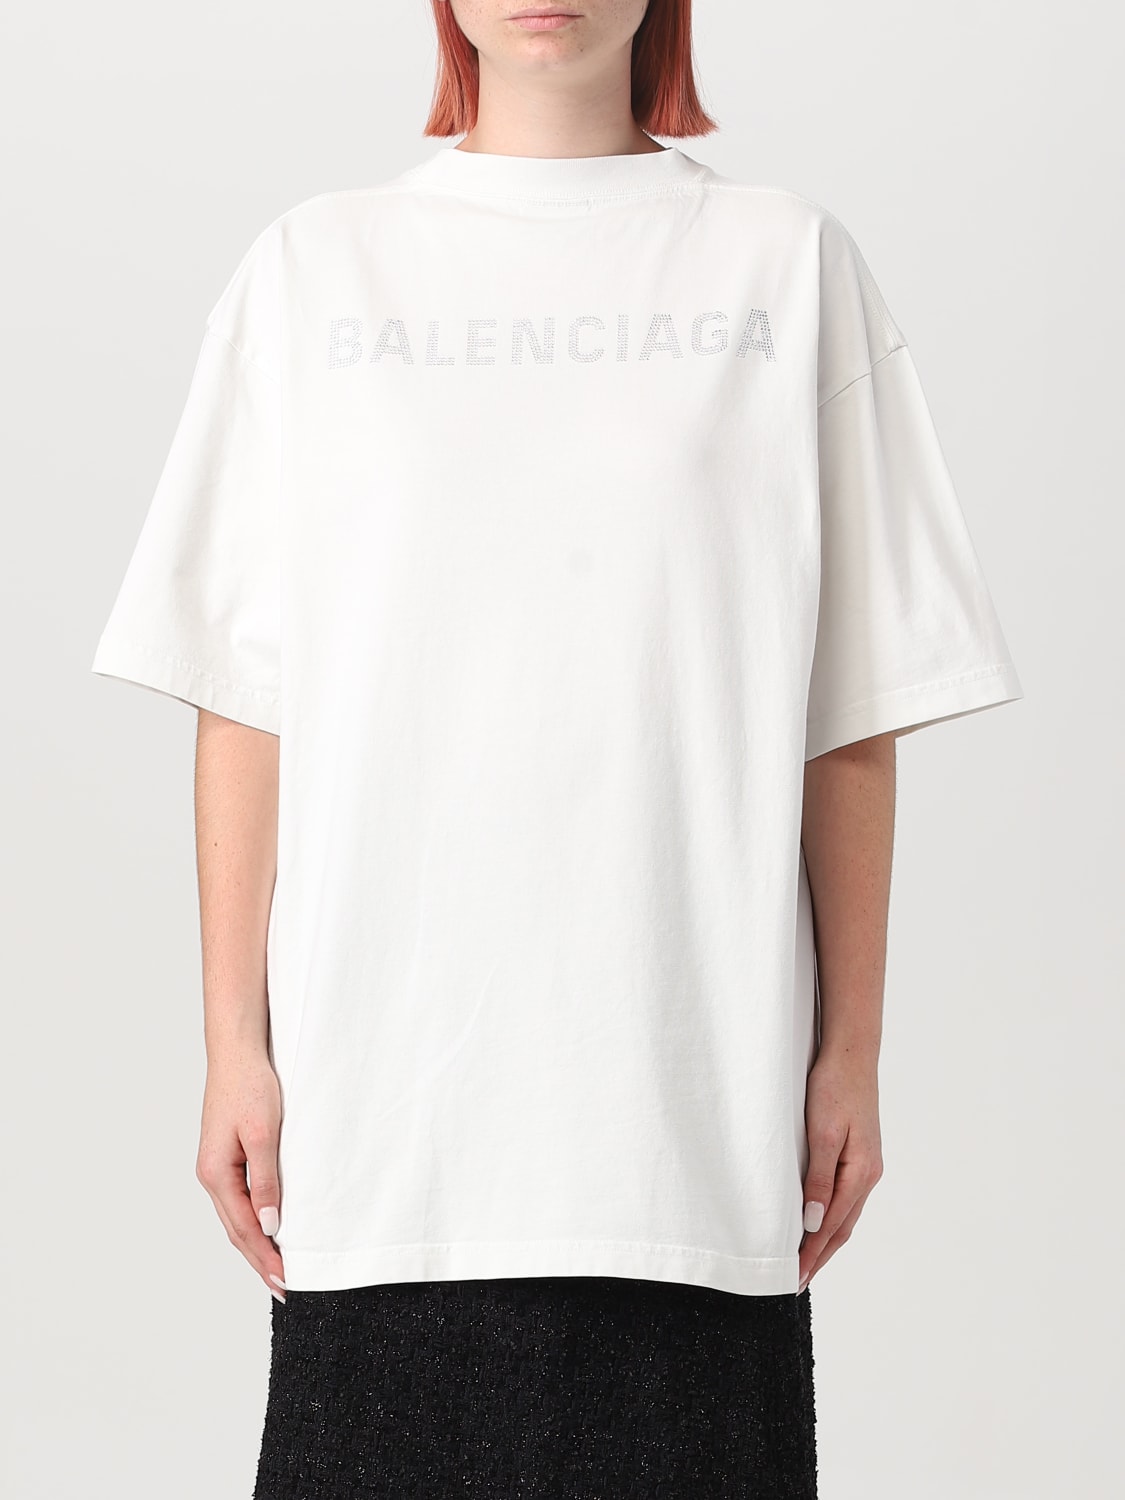 Balenciaga: White Cotton T-Shirt